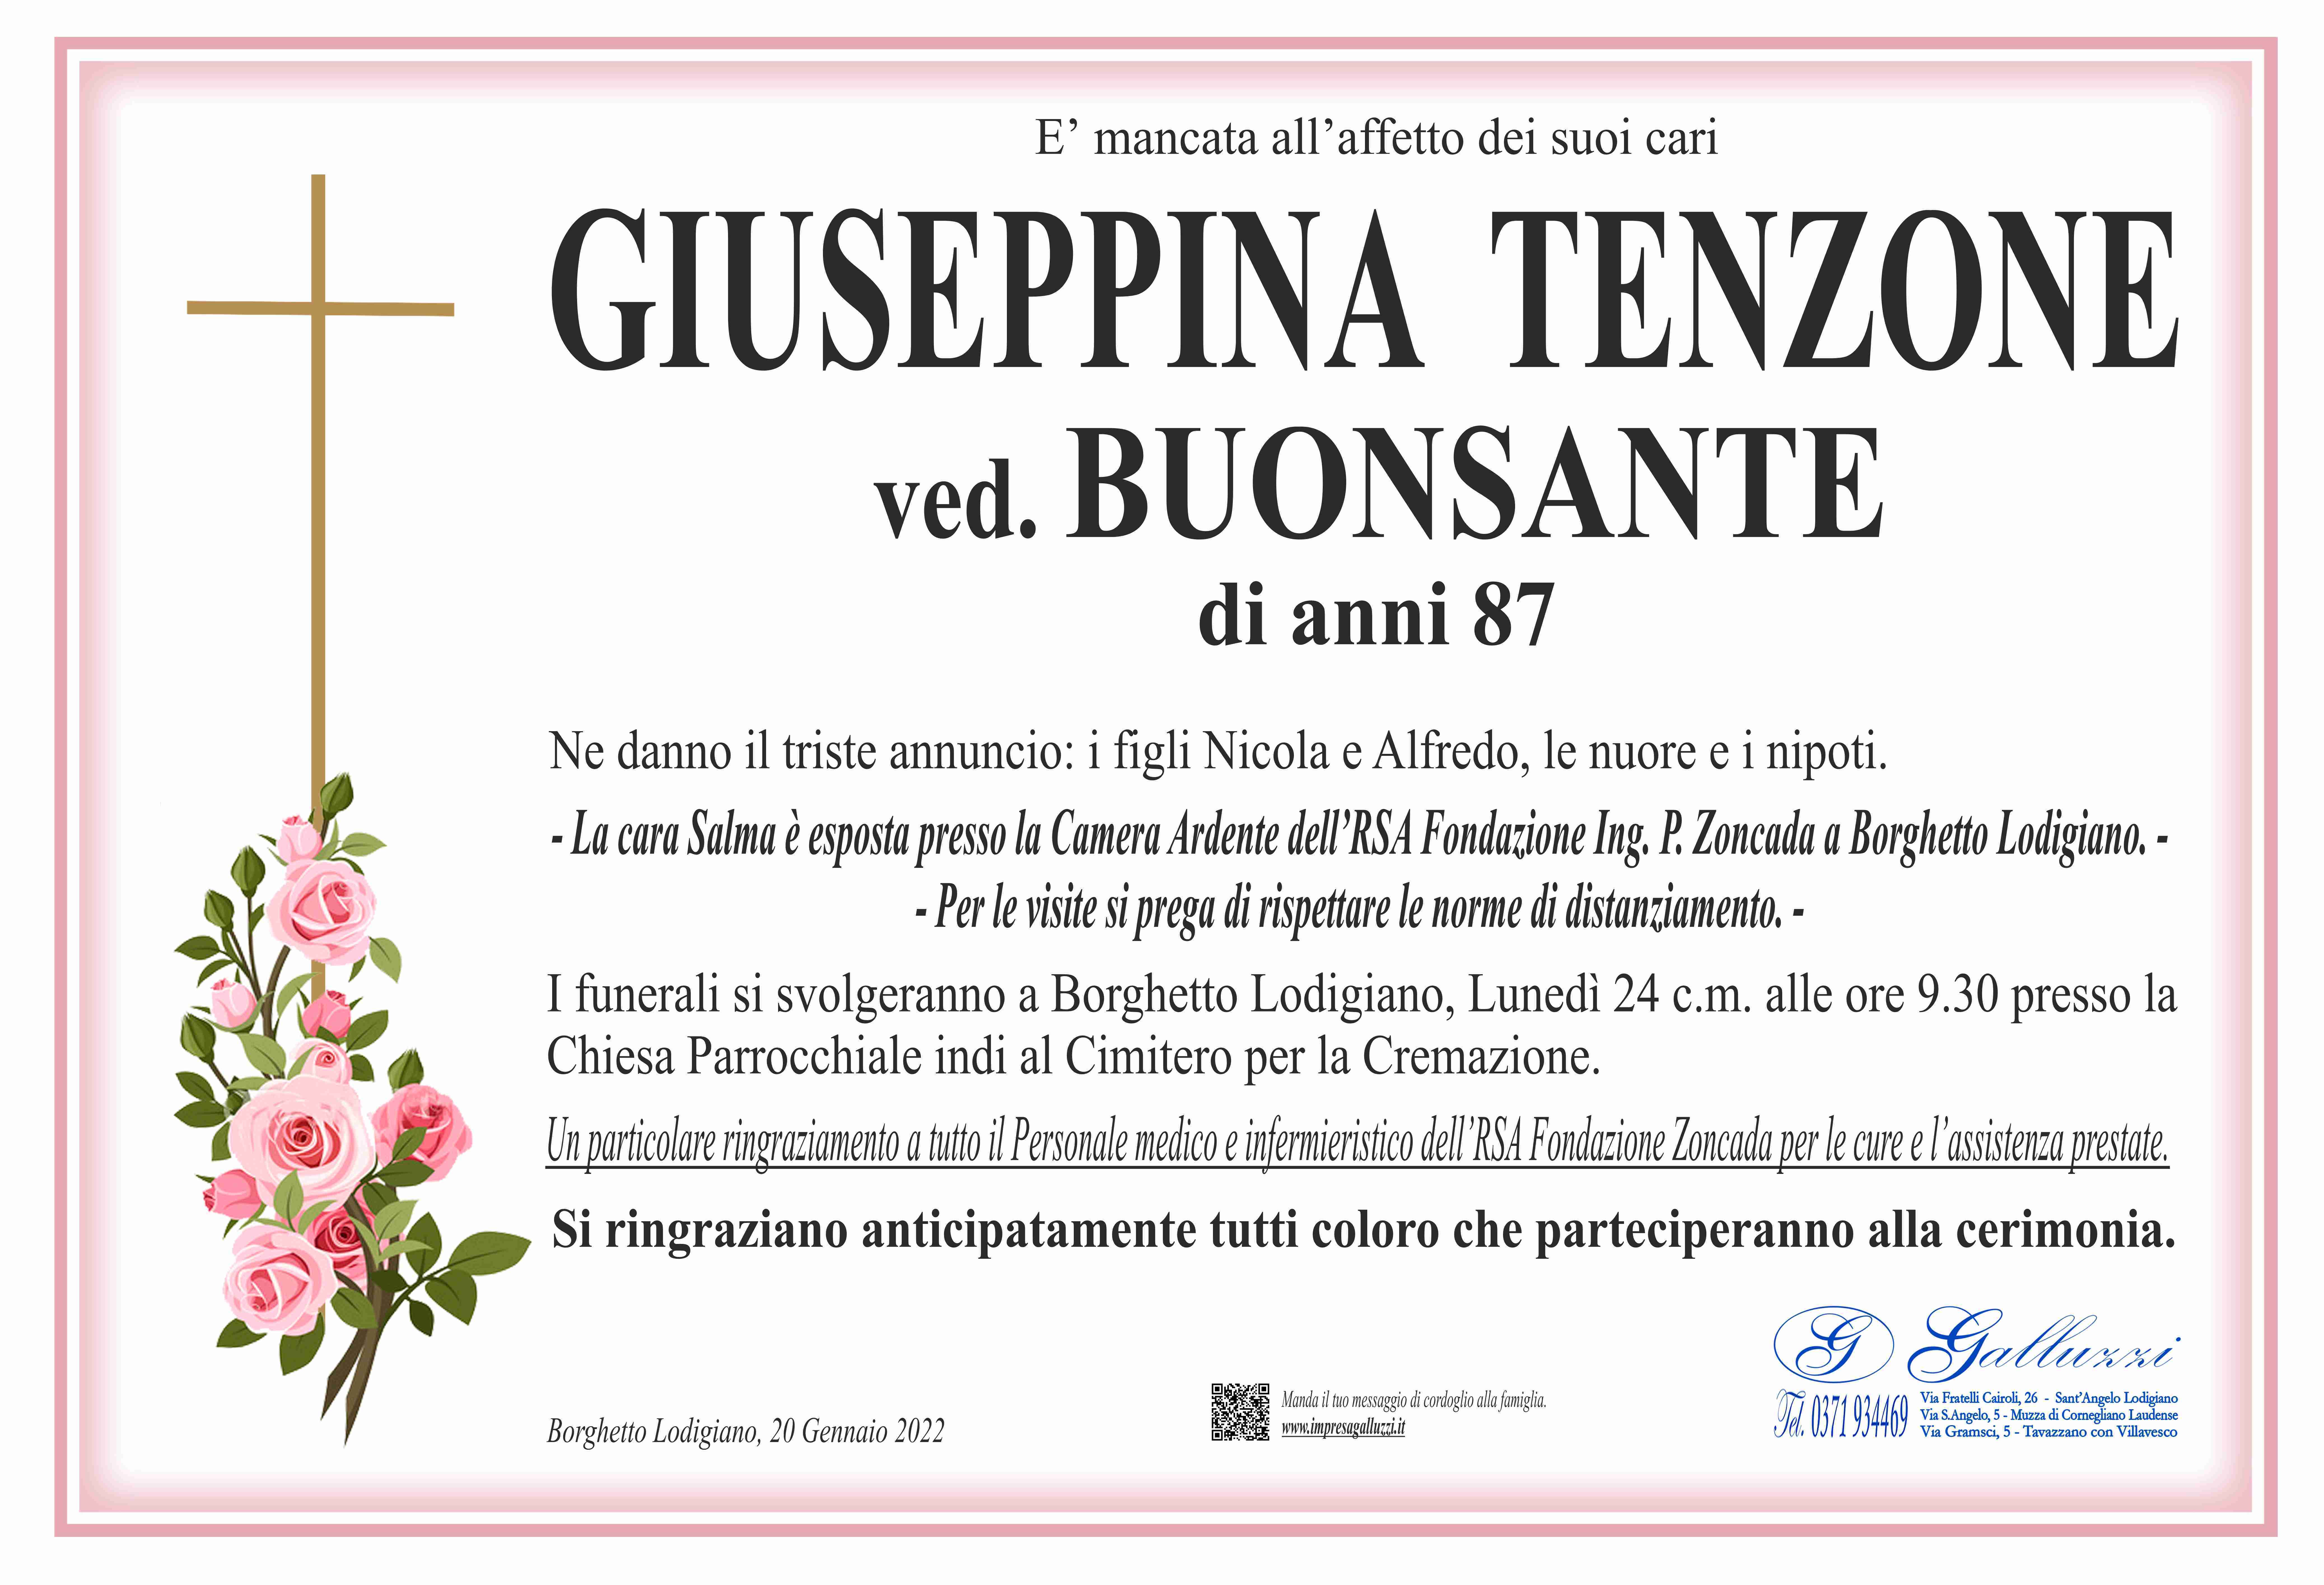 Giuseppina Tenzone